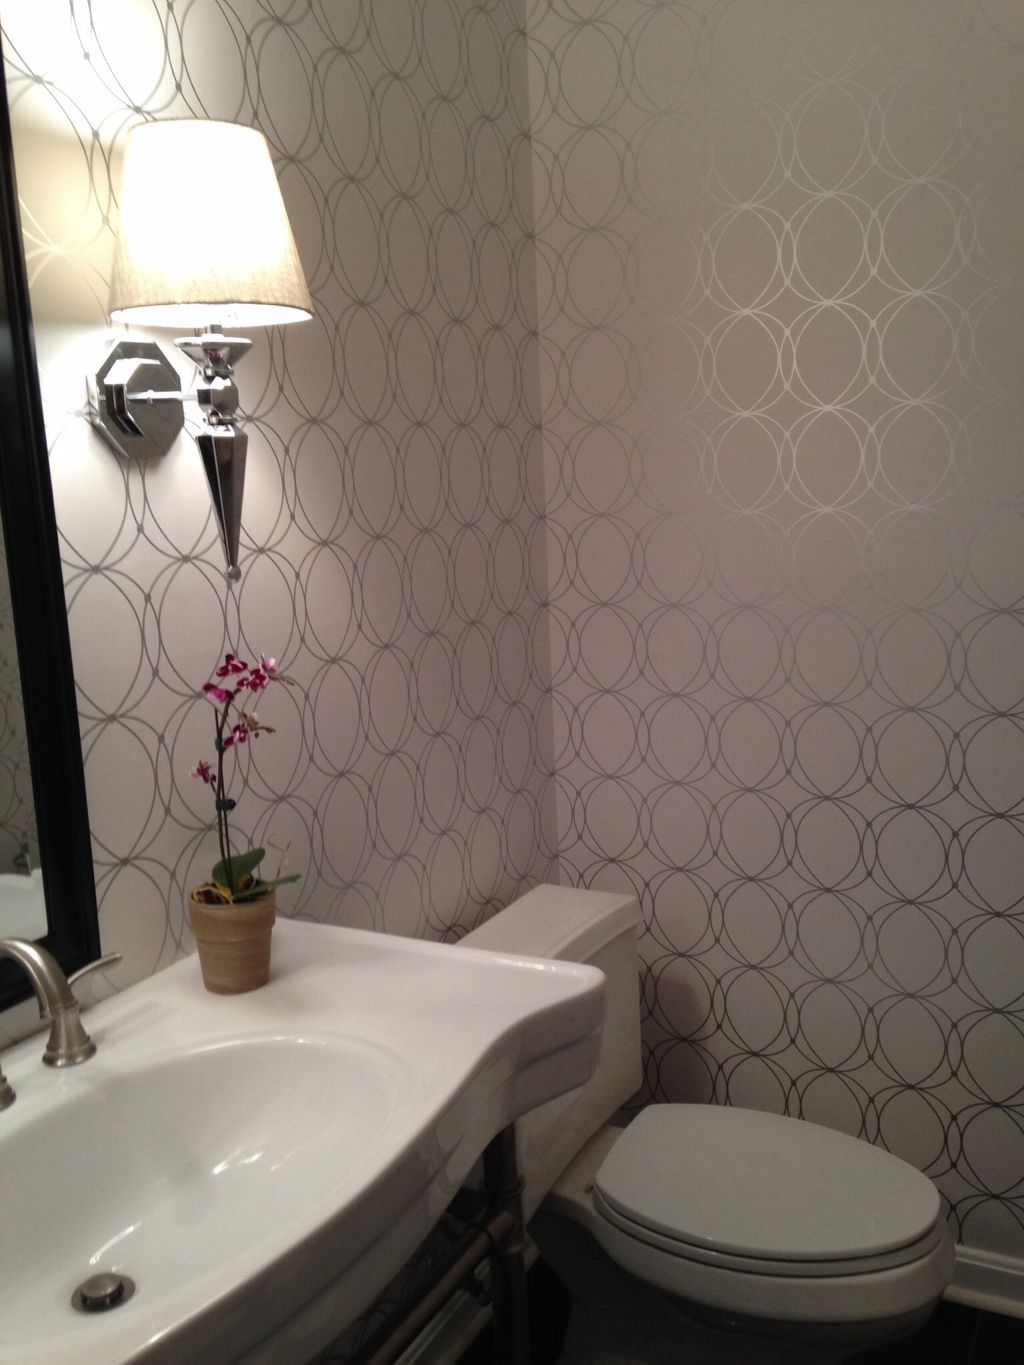 allen and roth wallpaper,bathroom,property,room,tile,toilet